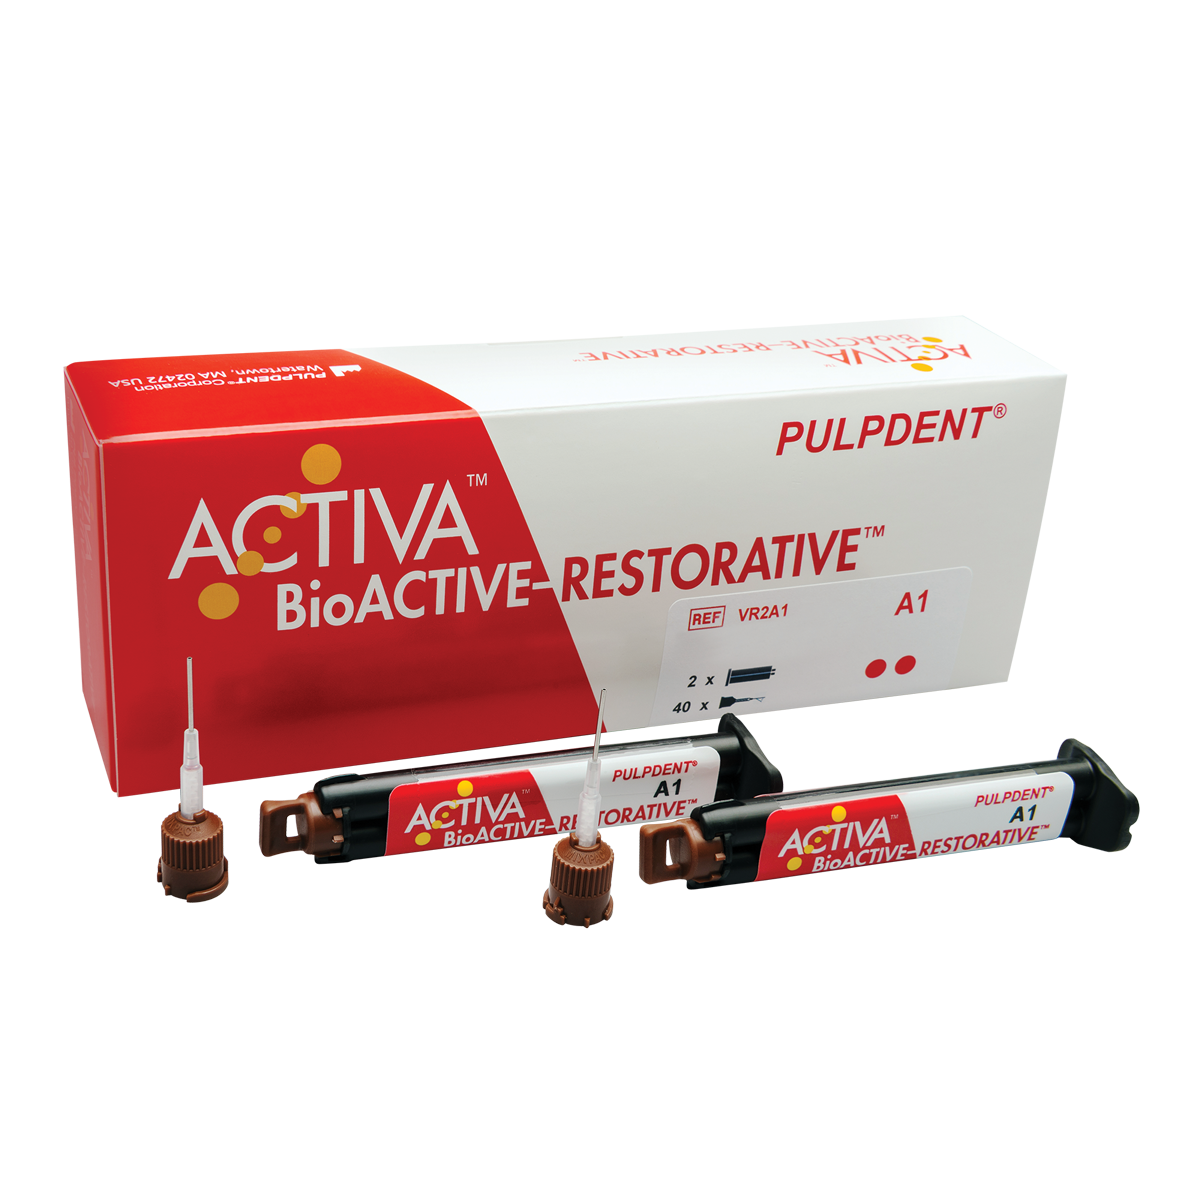 Pulpdent Activa BioACTIVE Restorative